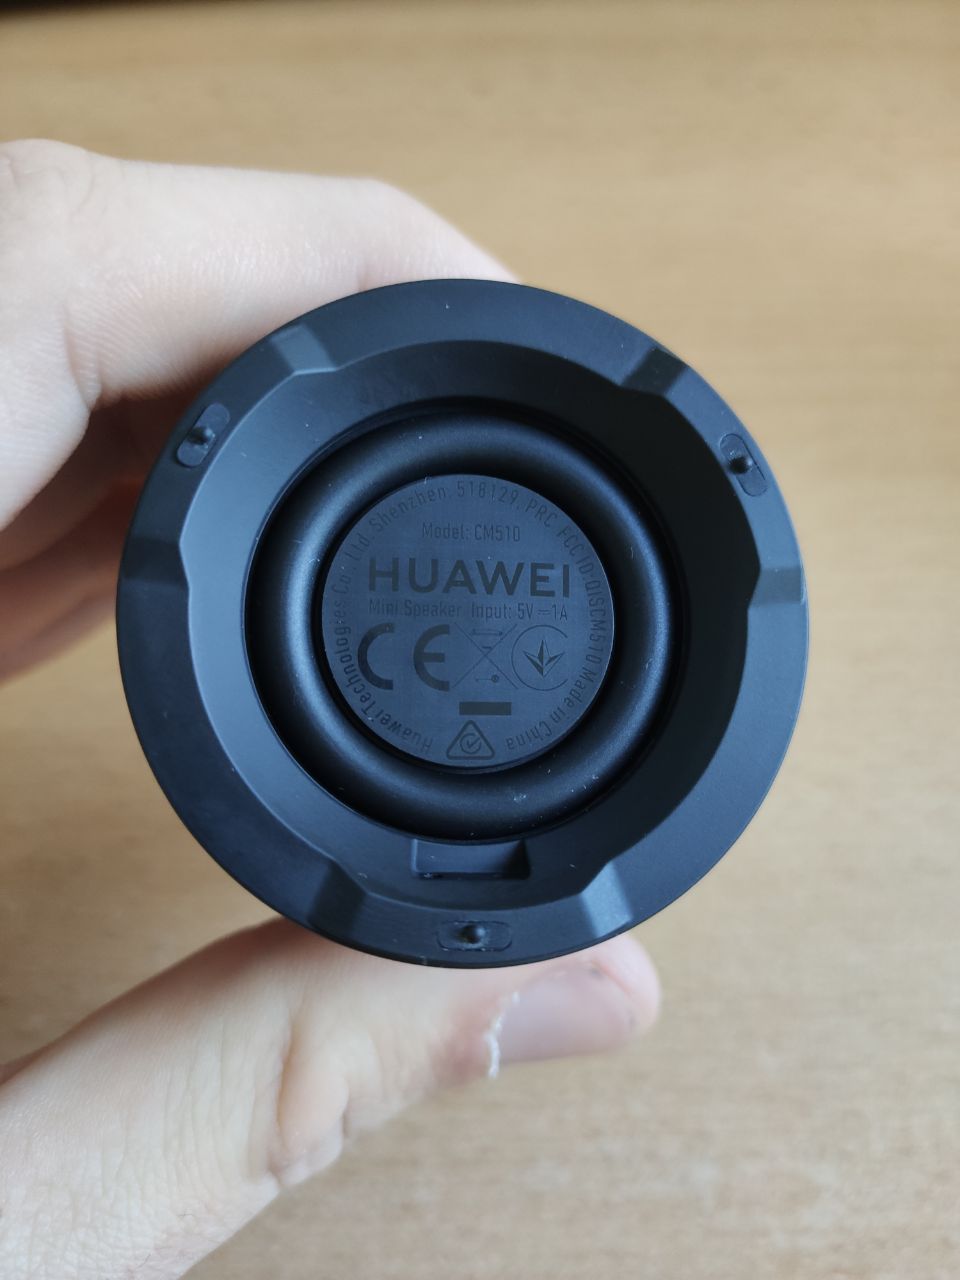 Klein, aber fein? - Huawei Mini Speaker CM510 im Test 4